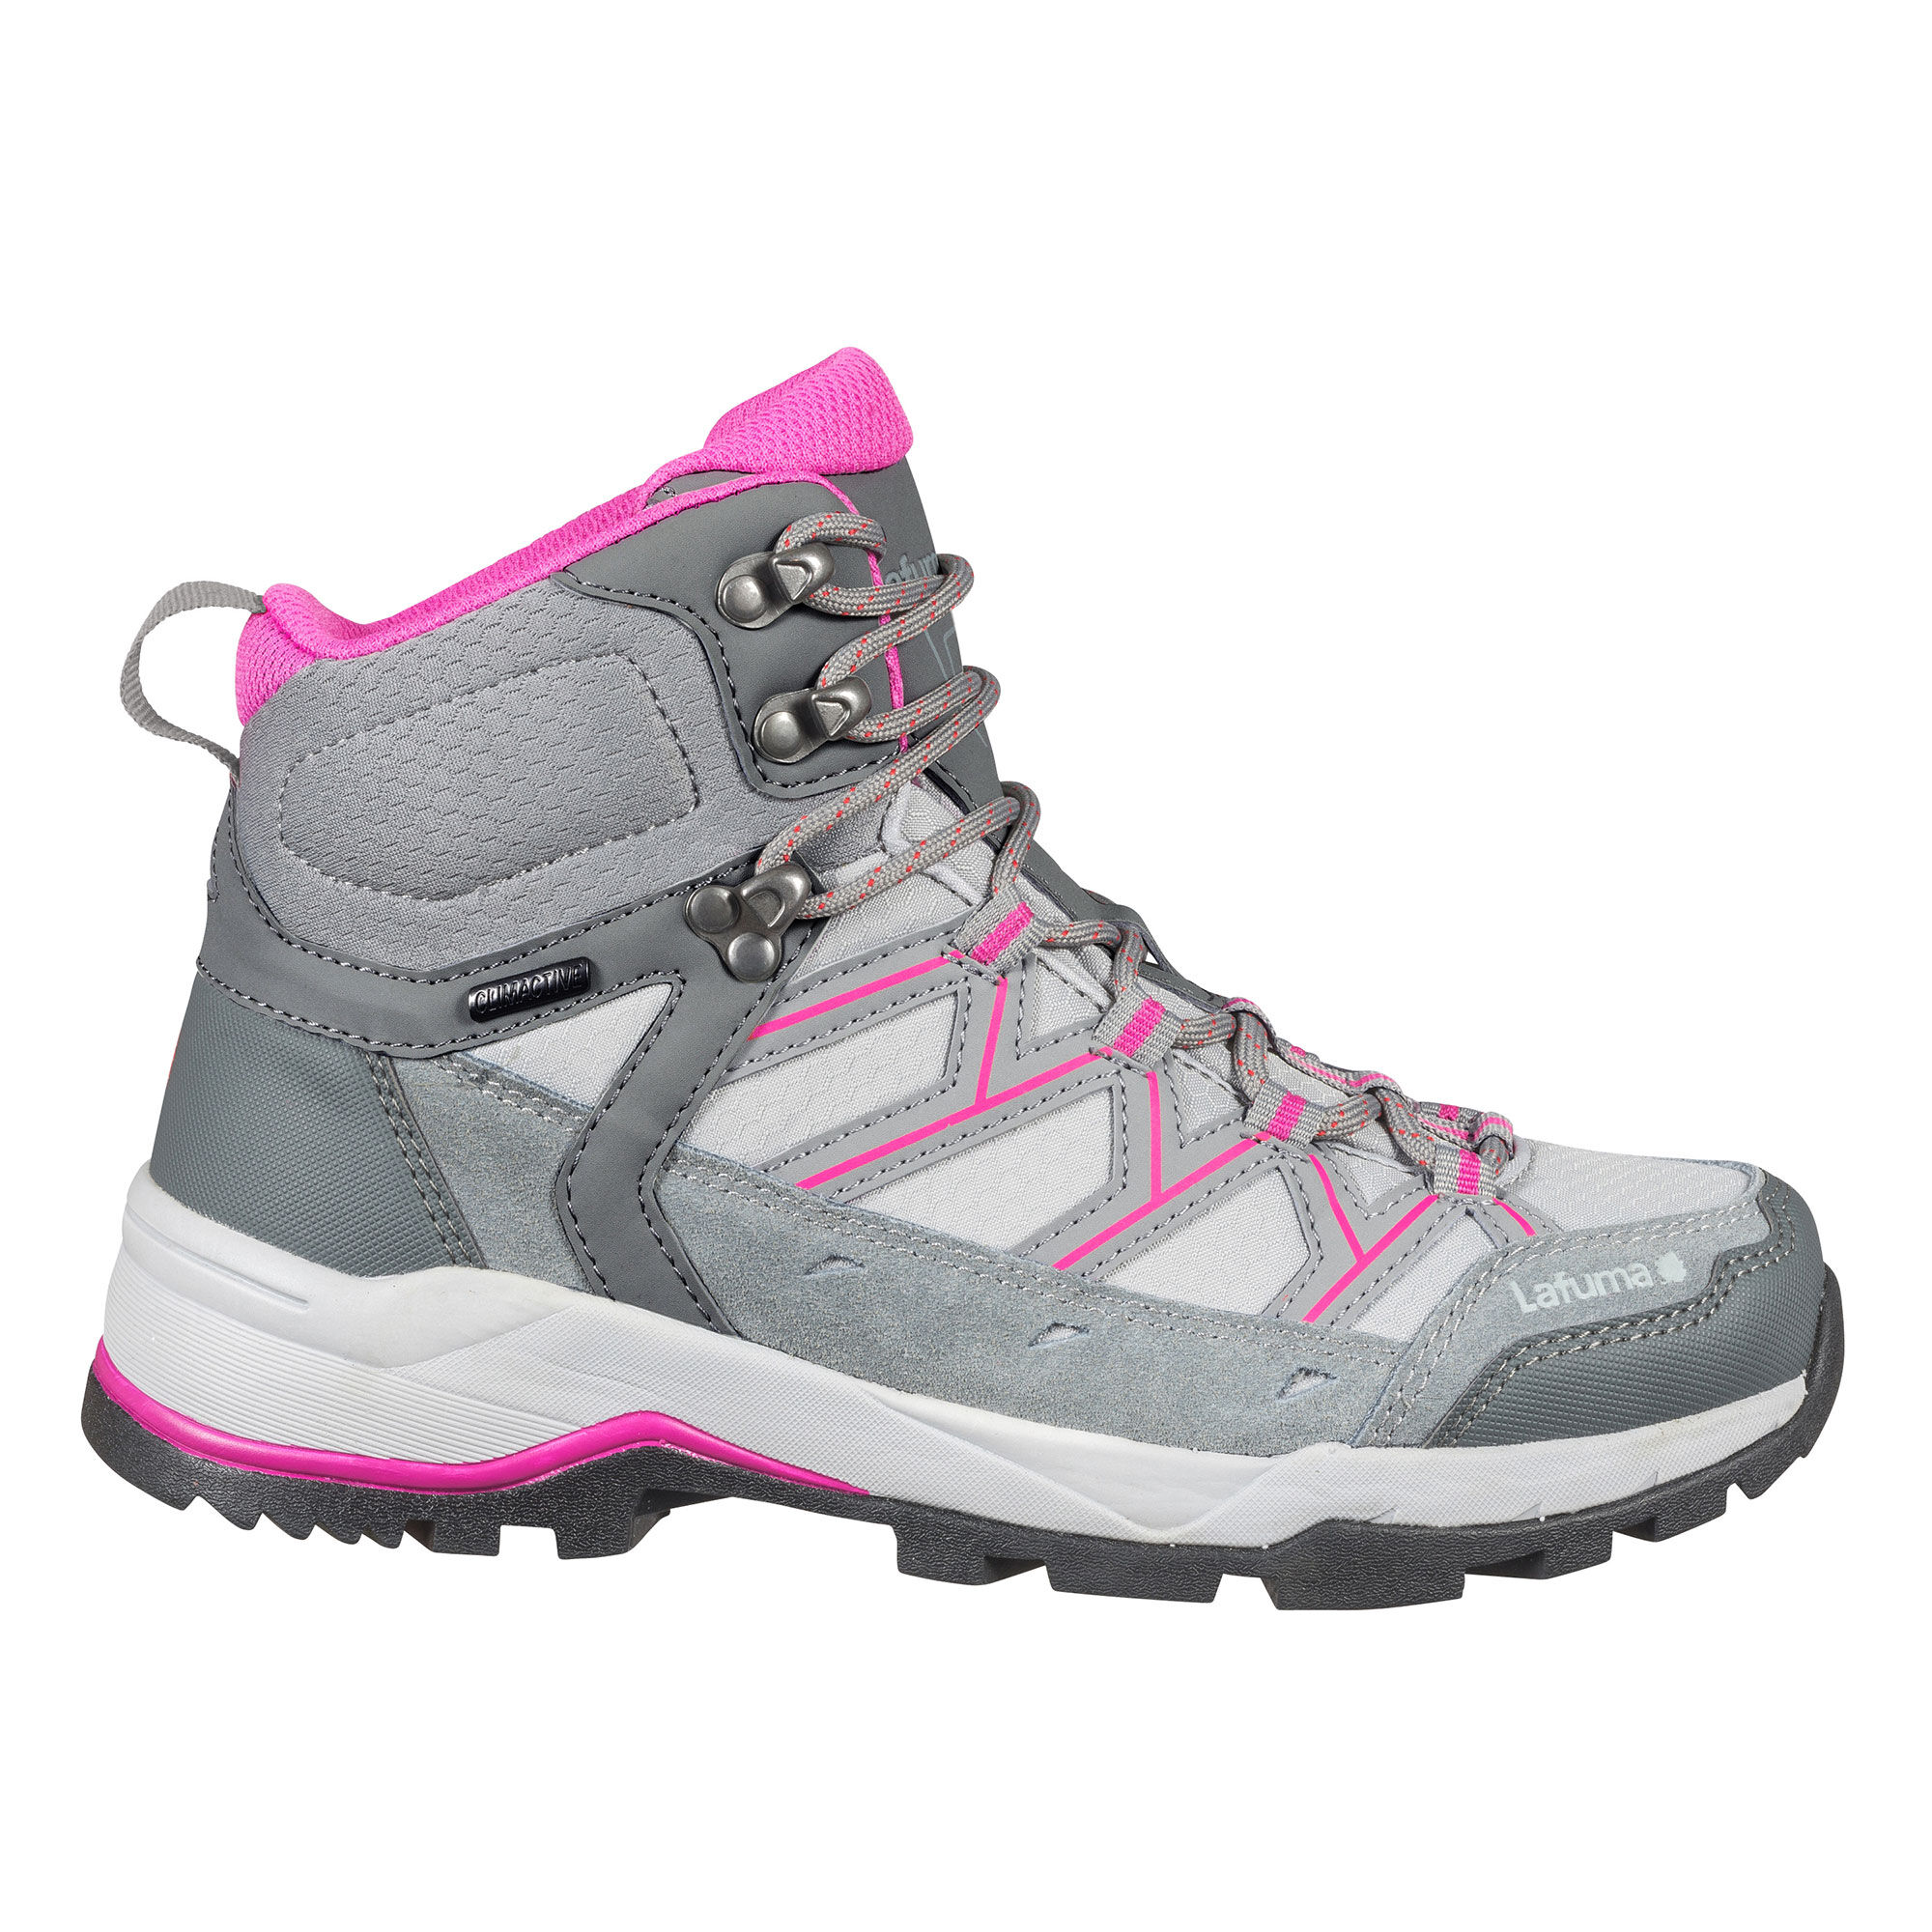 Lafuma - LD Aymara - Walking Boots - Women's